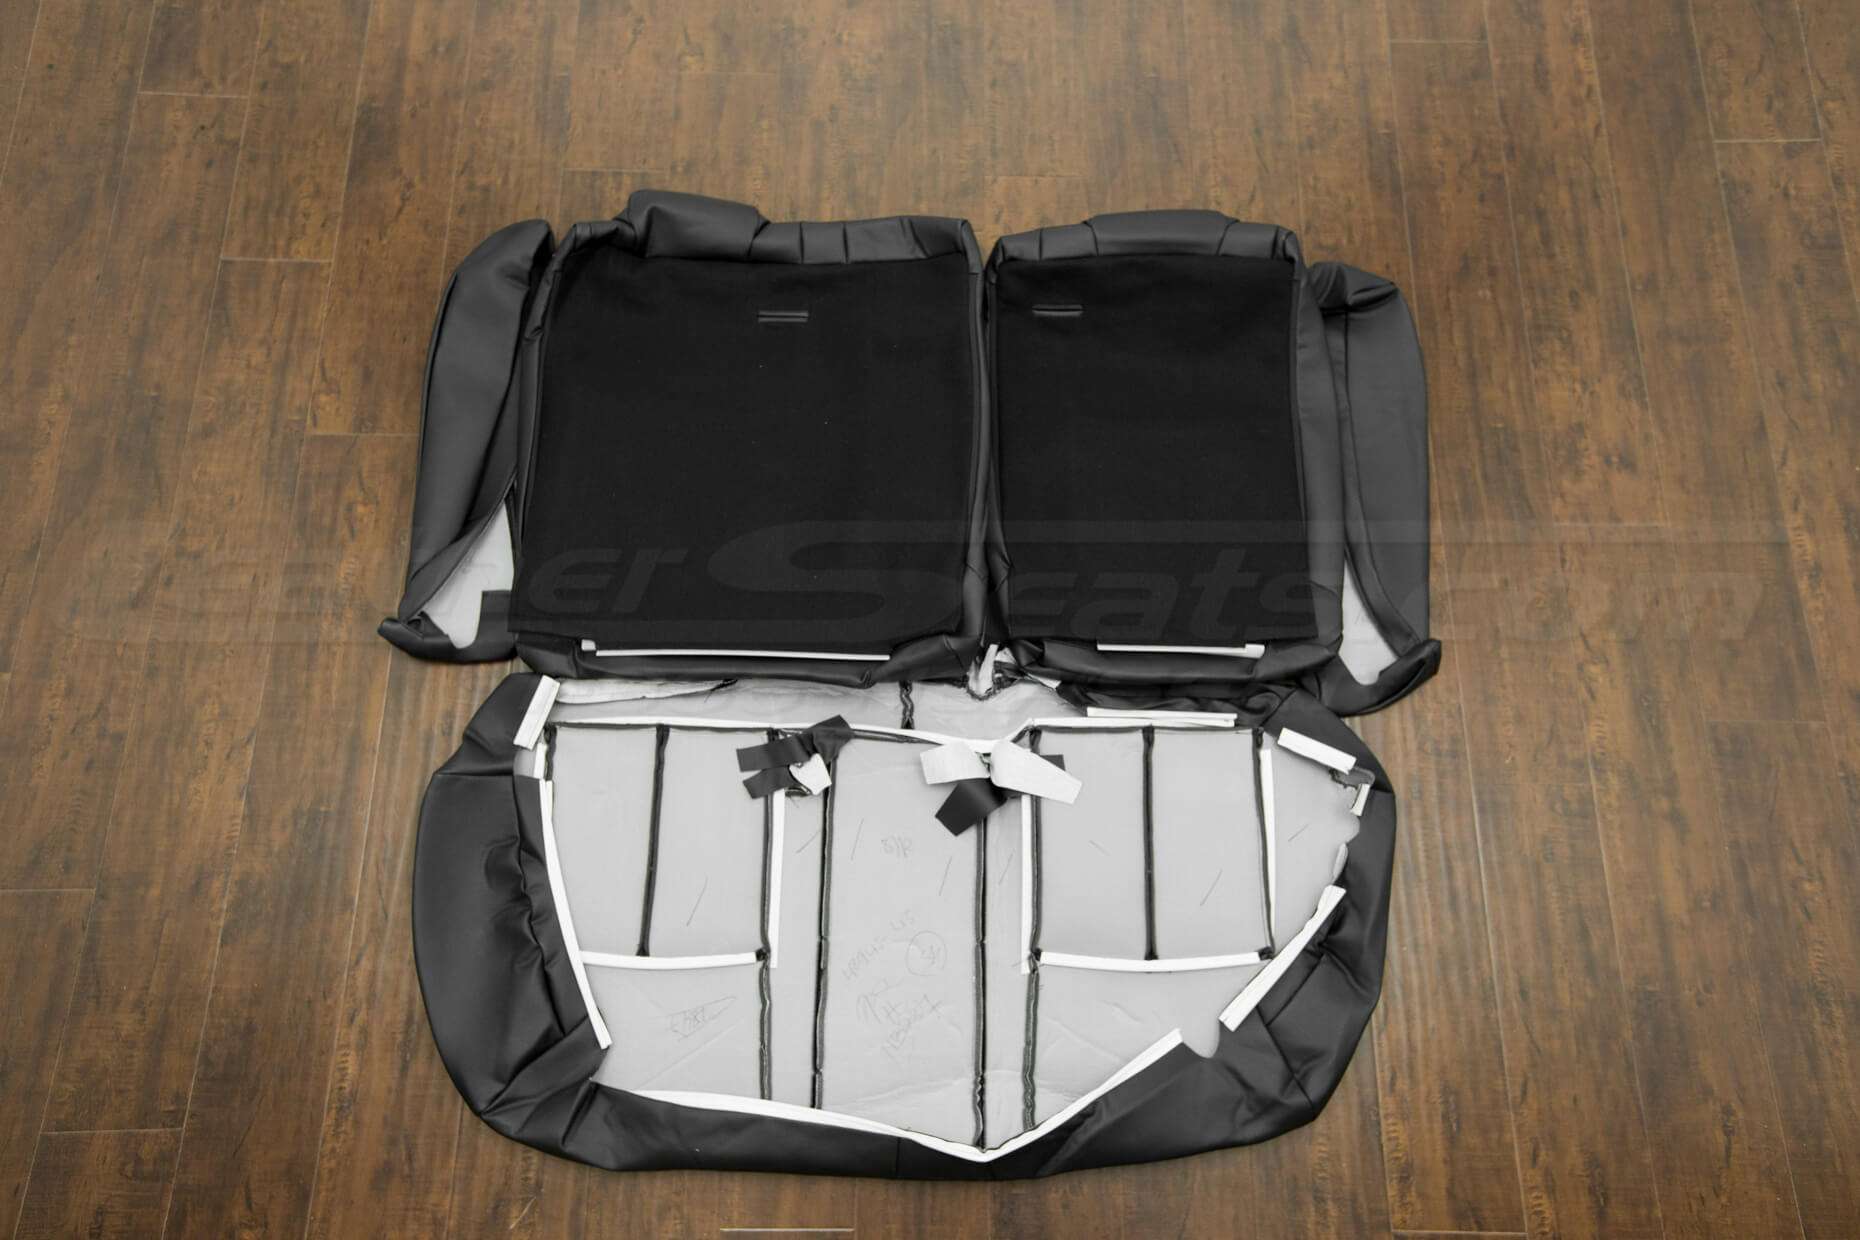 Nissan Sentra Leather Seats - Black - Back of rear seats